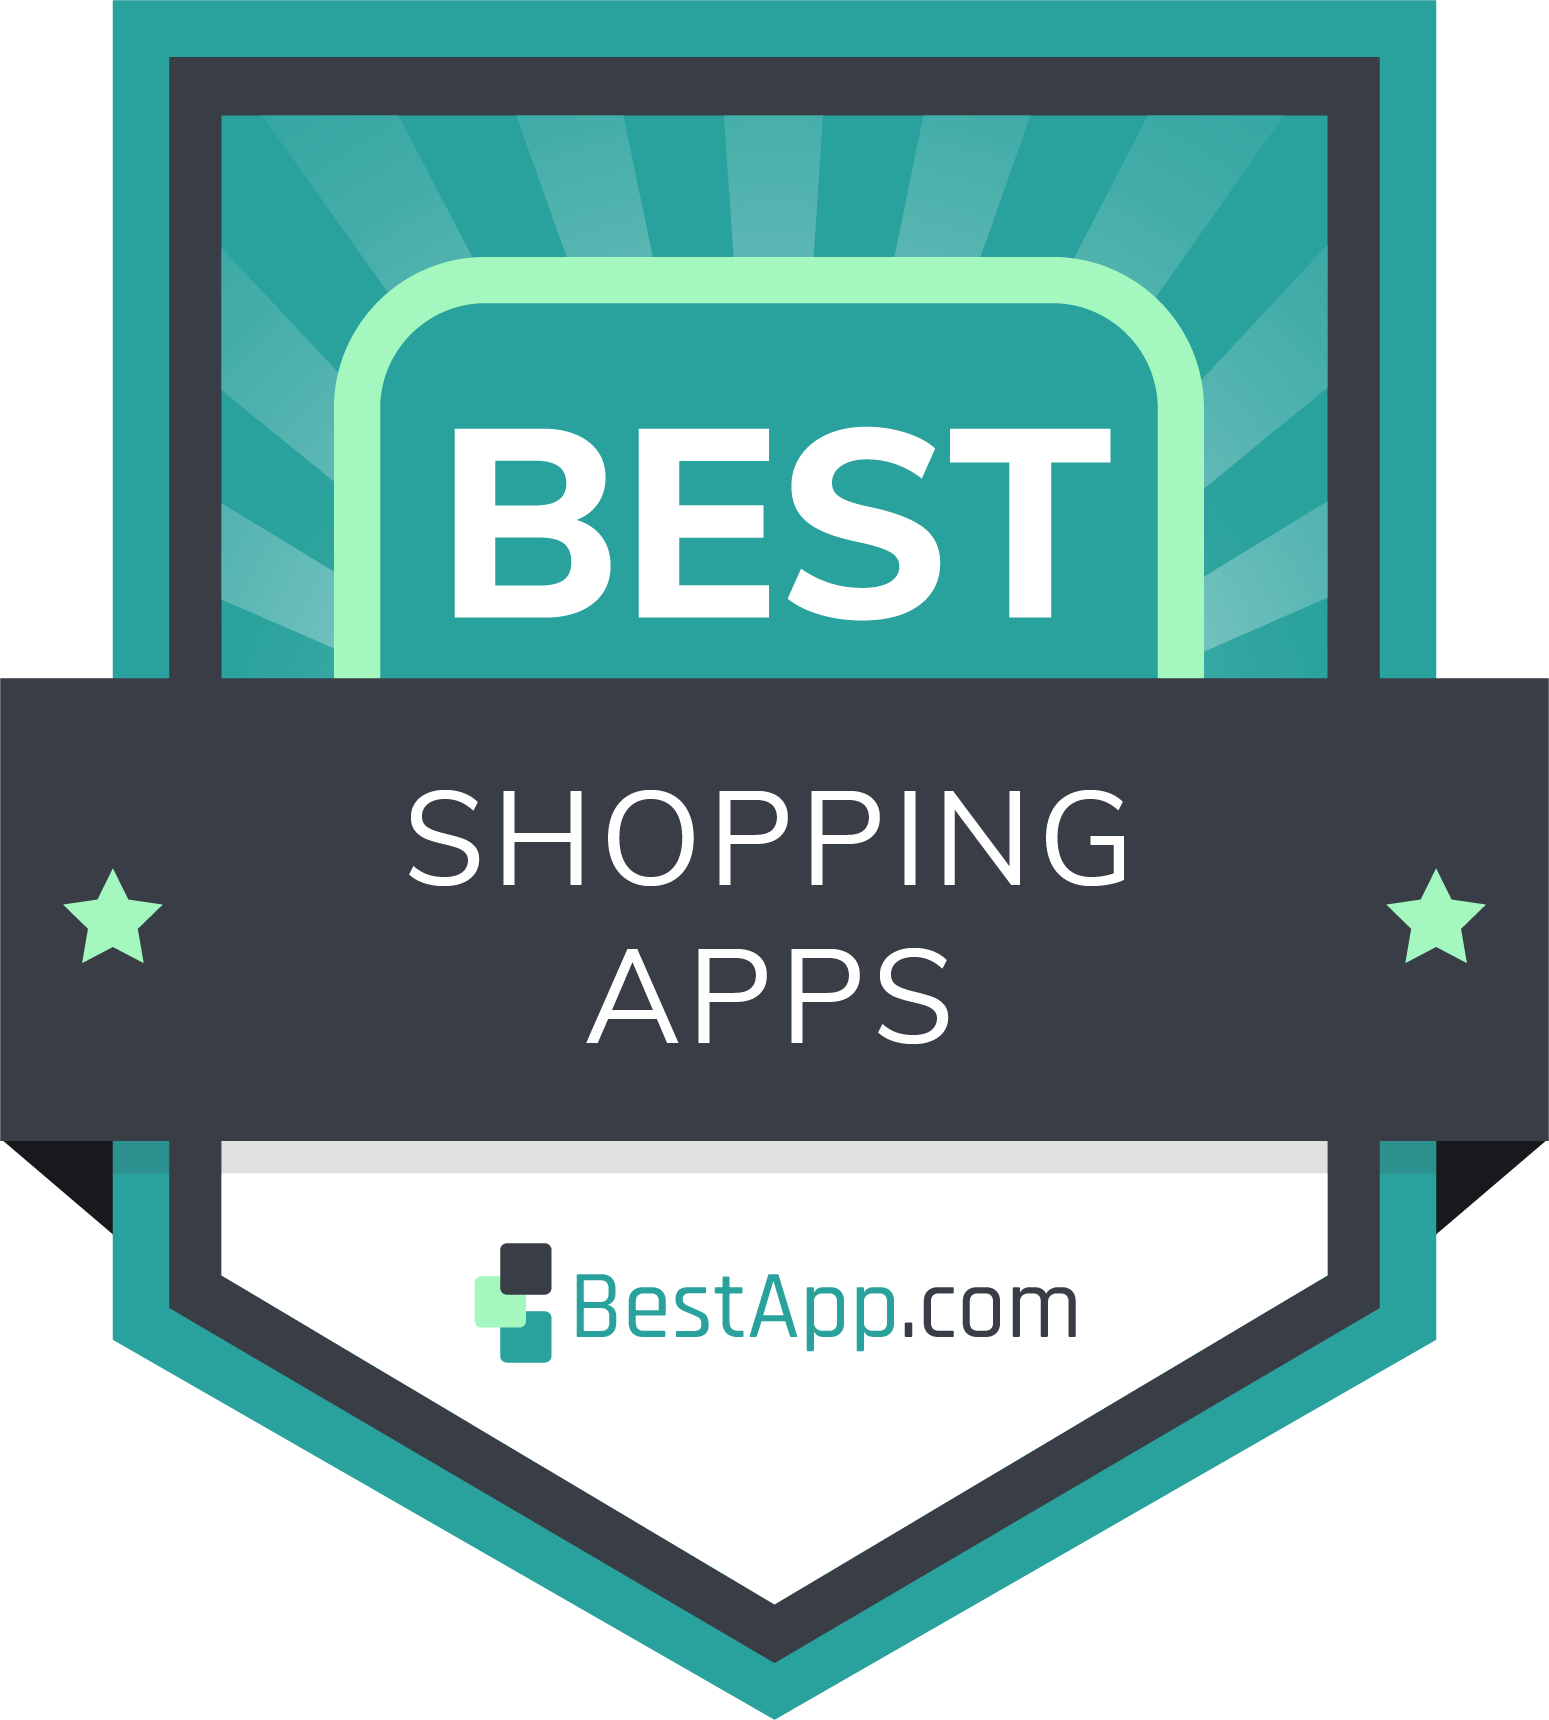 Best Shopping Apps Badge